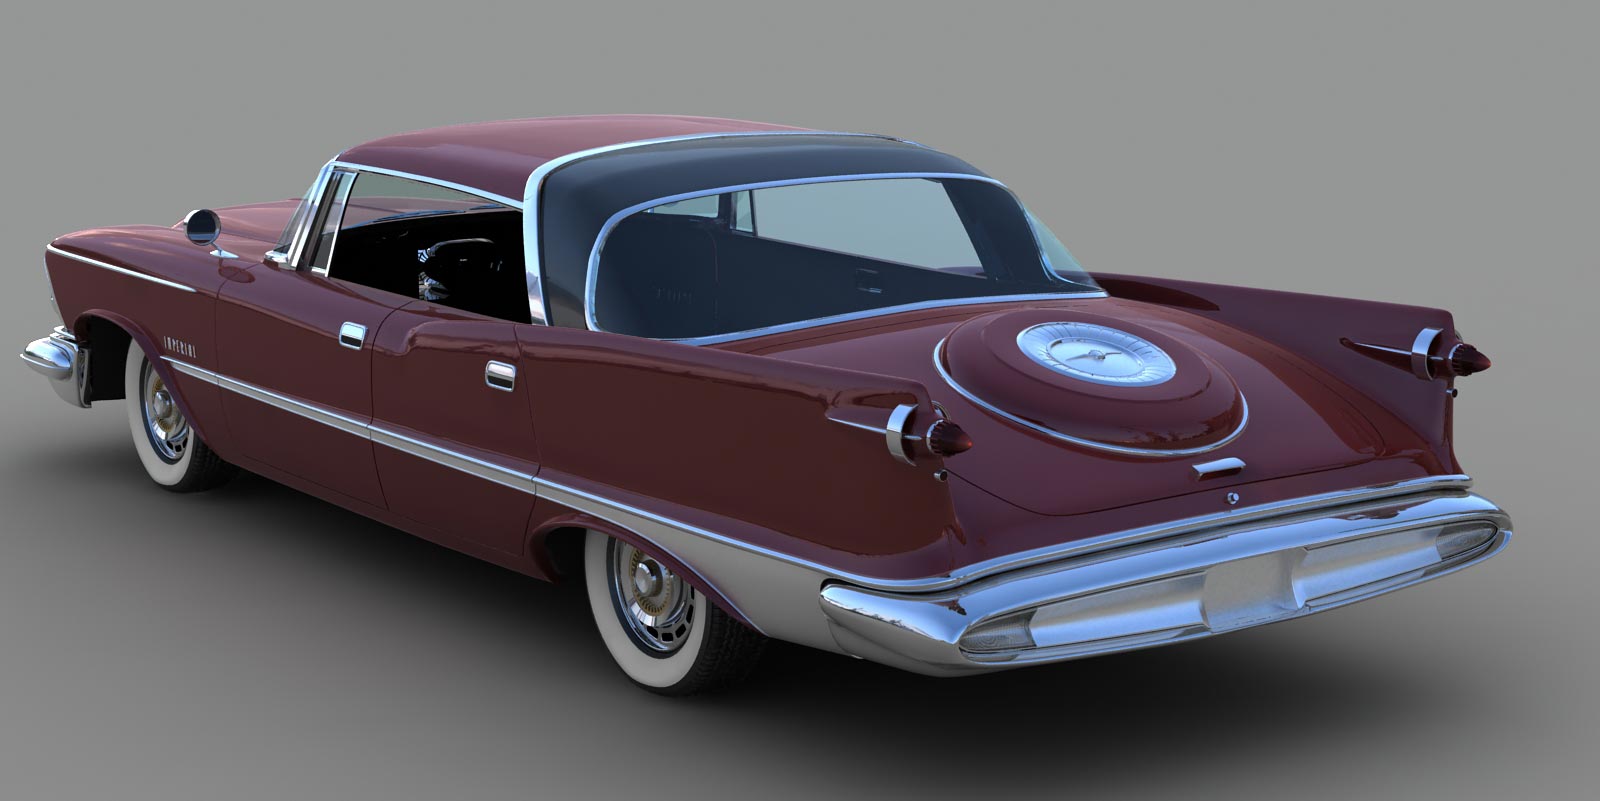 1959 Chrysler Imperial Southampton